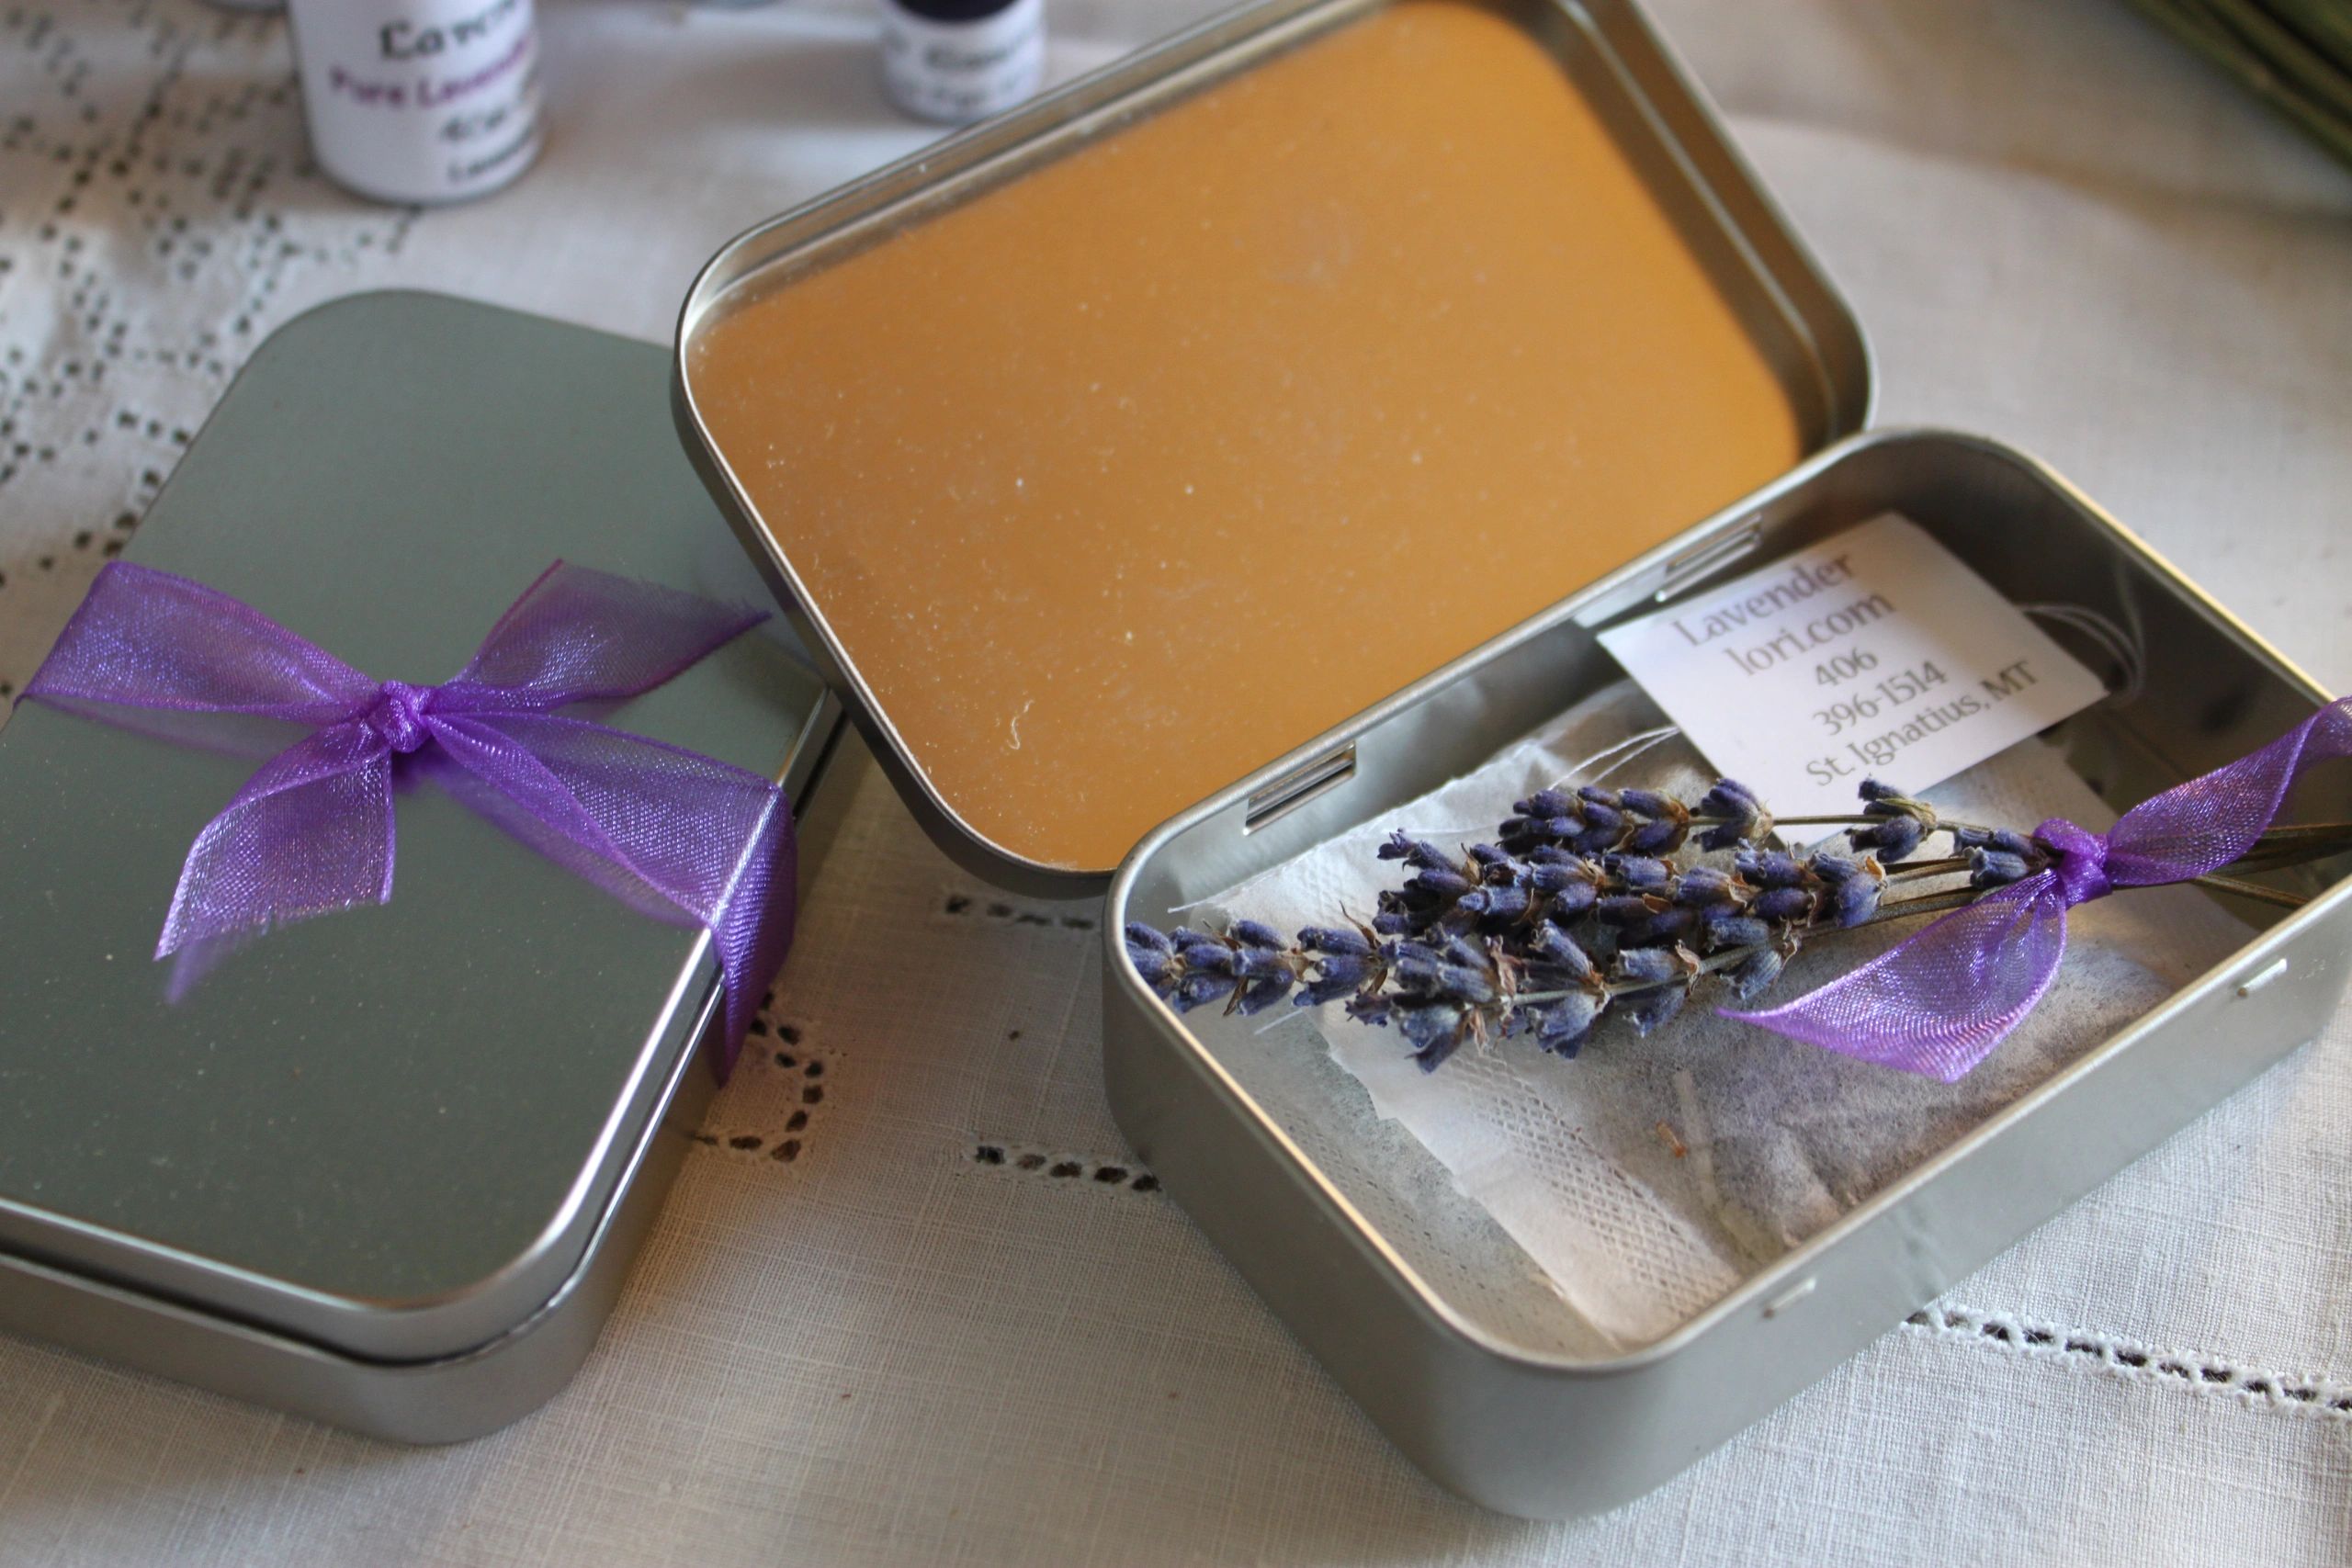 Decorative tin box with lavender tea bags inside.